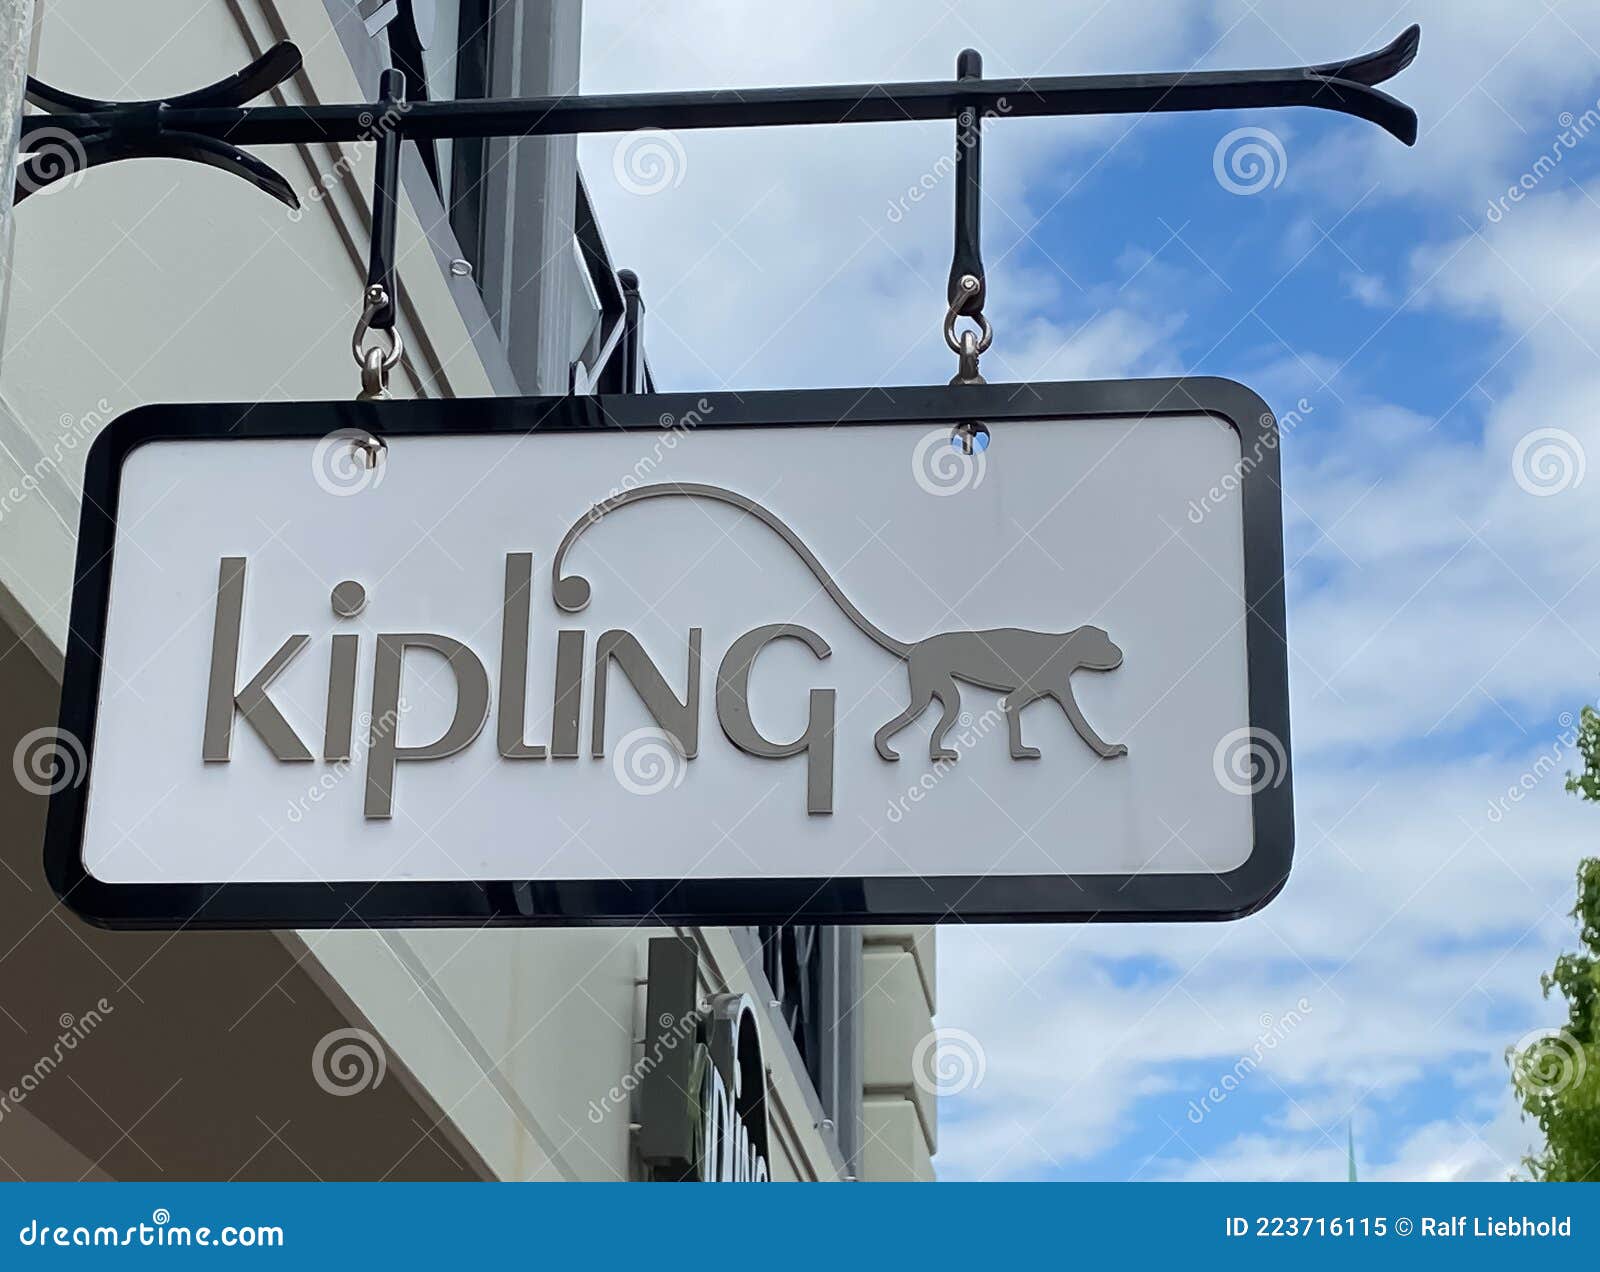 Kipling Logo Stock Photos - Free & Royalty-Free Stock Photos from Dreamstime